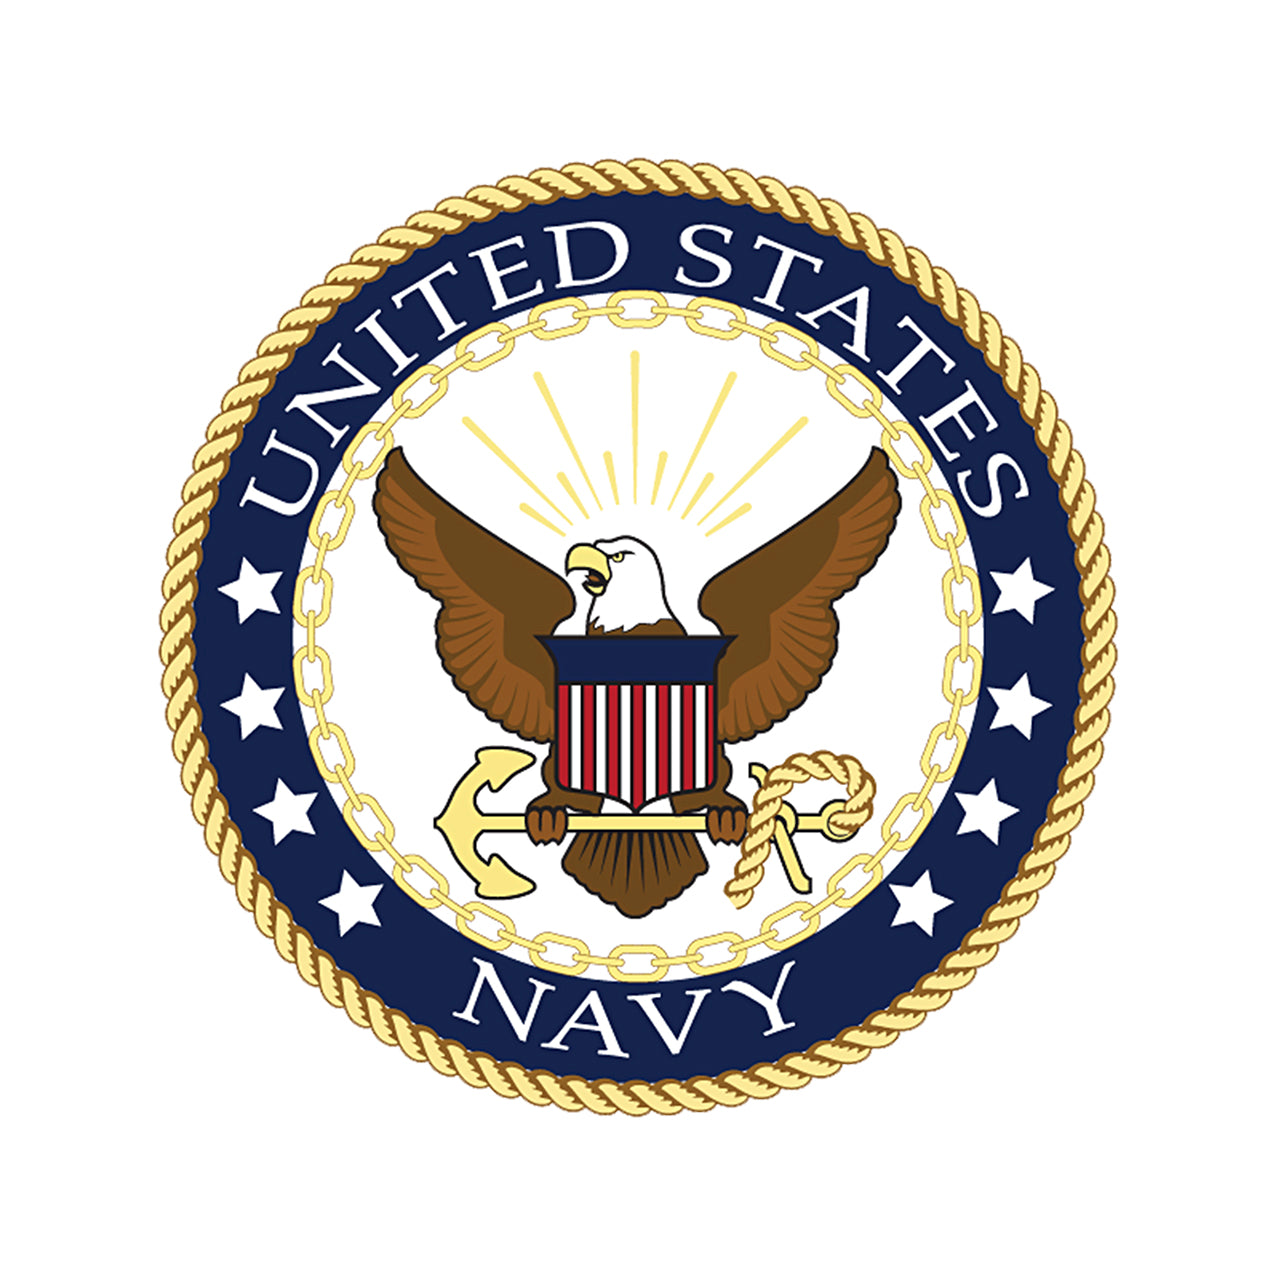 NAVY Humidor American Emblems Navy One